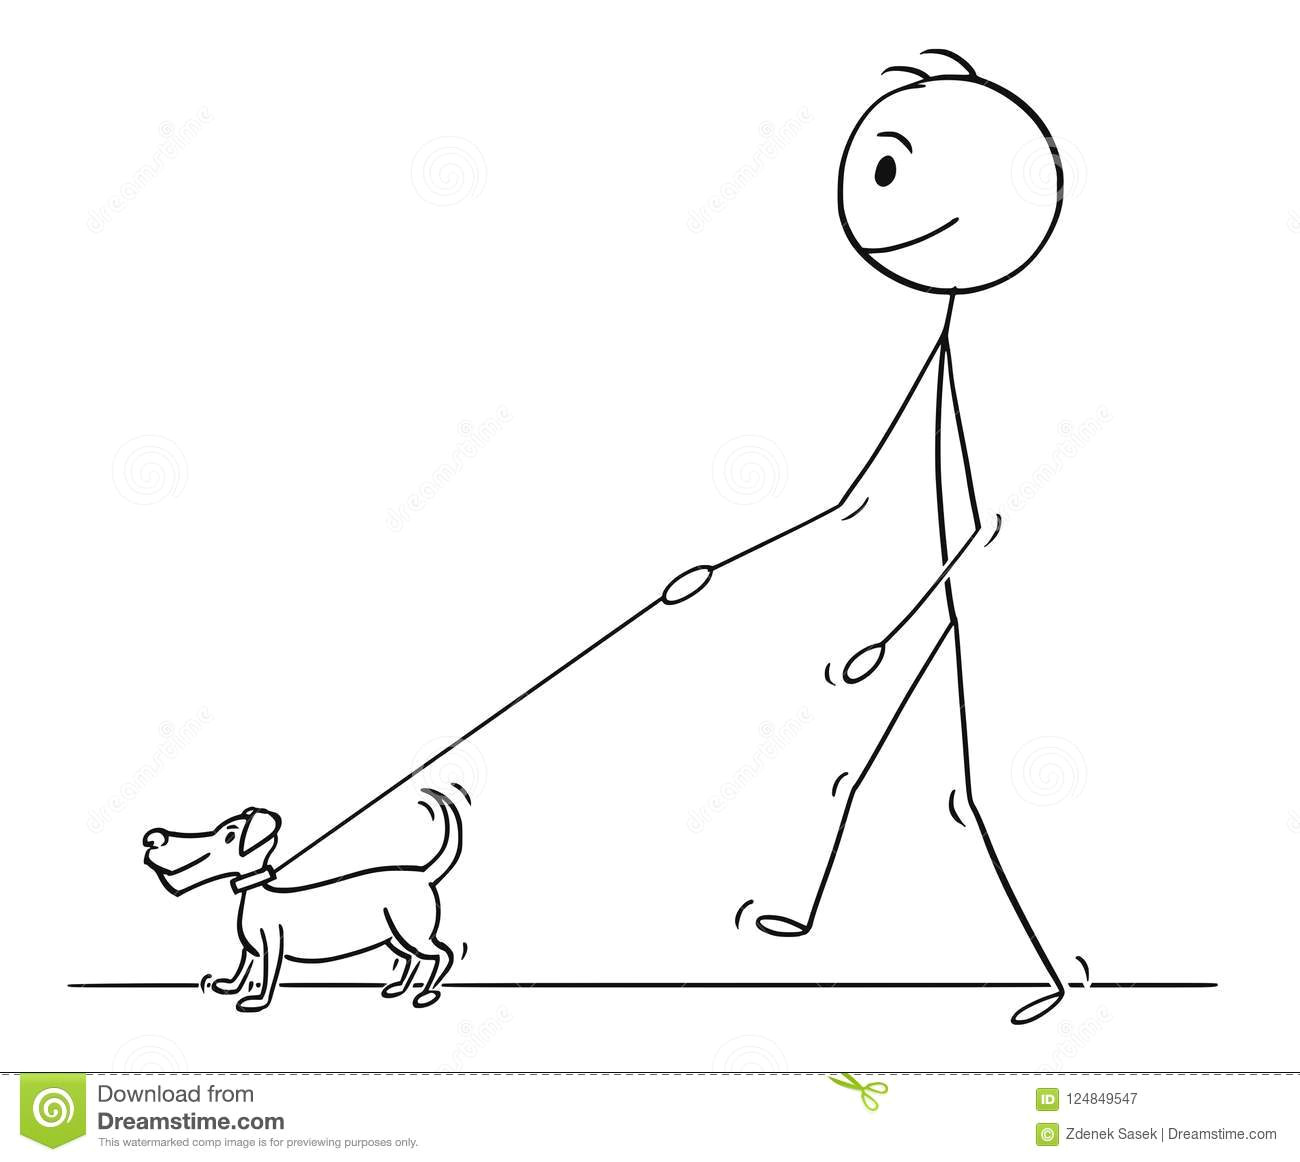 Drawing Of Man Walking A Dog Cartoon Of Man Walking with Small Dog Stock Vector Illustration Of